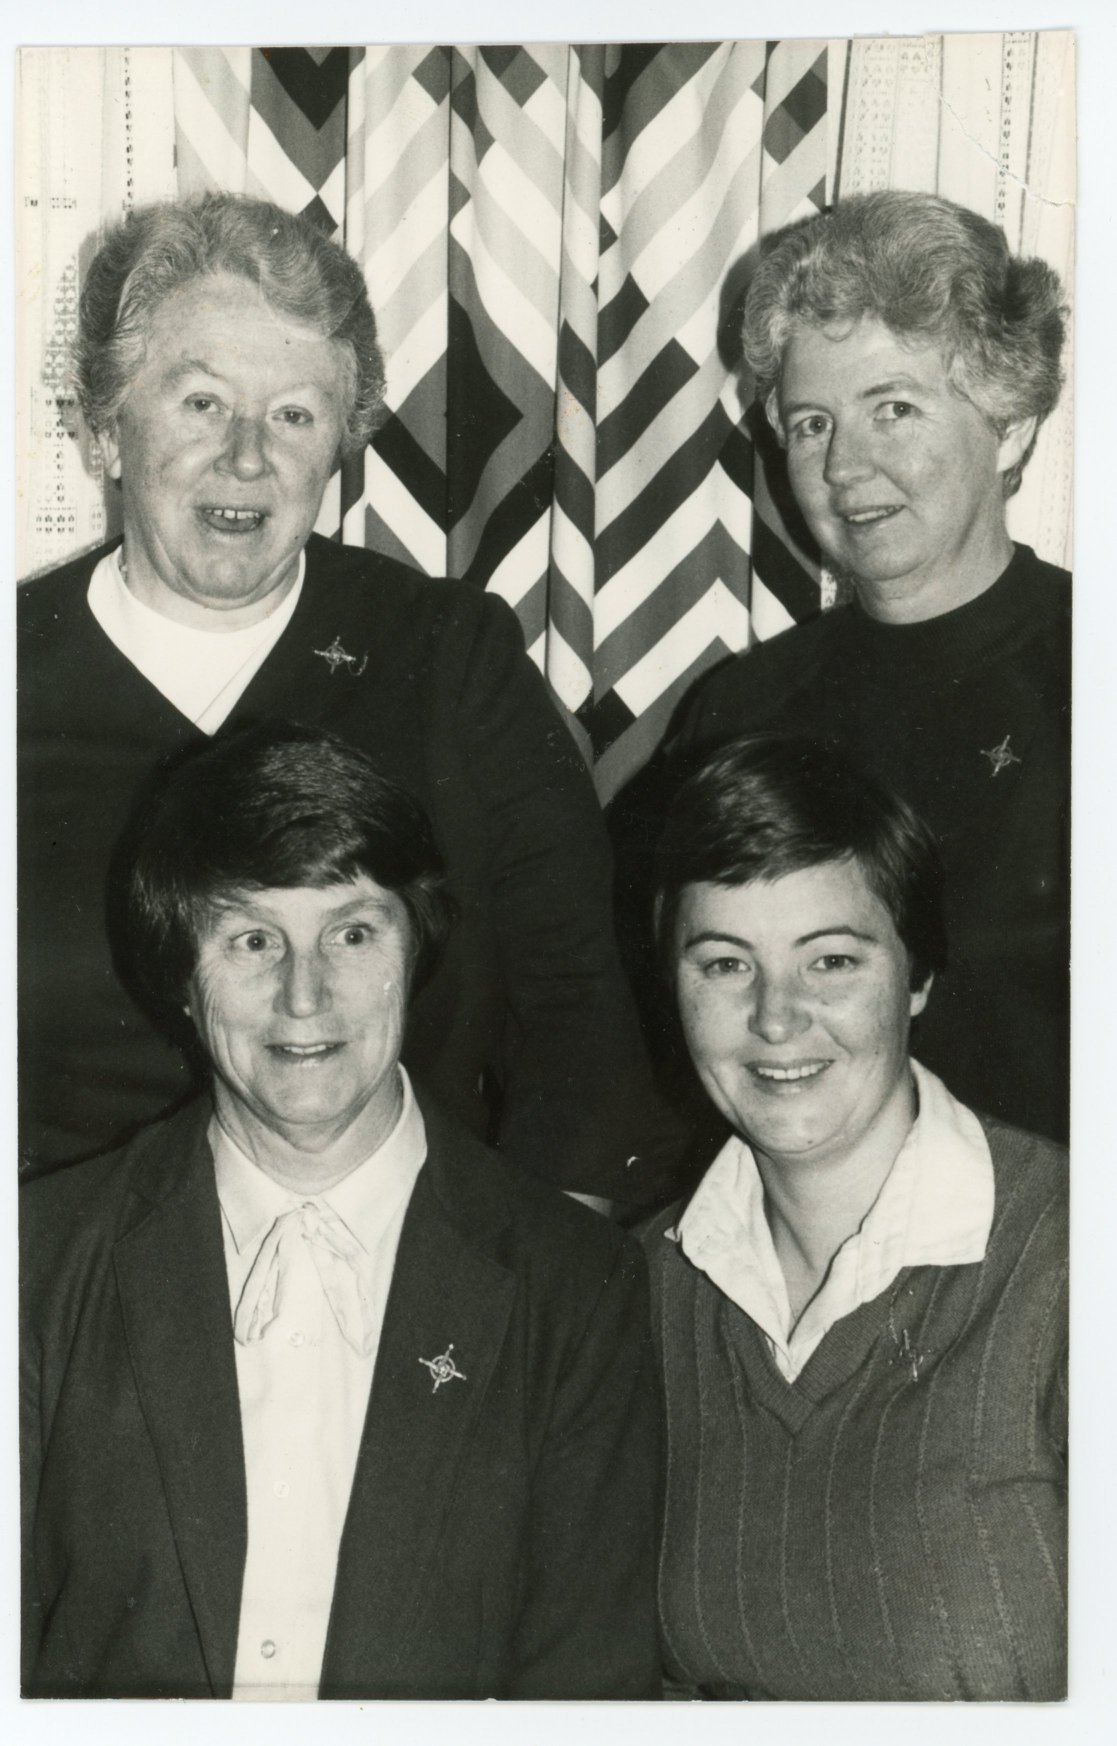  1983 - West Australian Brigidines in Wembley Community Rear: Carmel Gravenall, Dorothea Hickey Front: Bernice Tonkin, Carmel Gentelli 